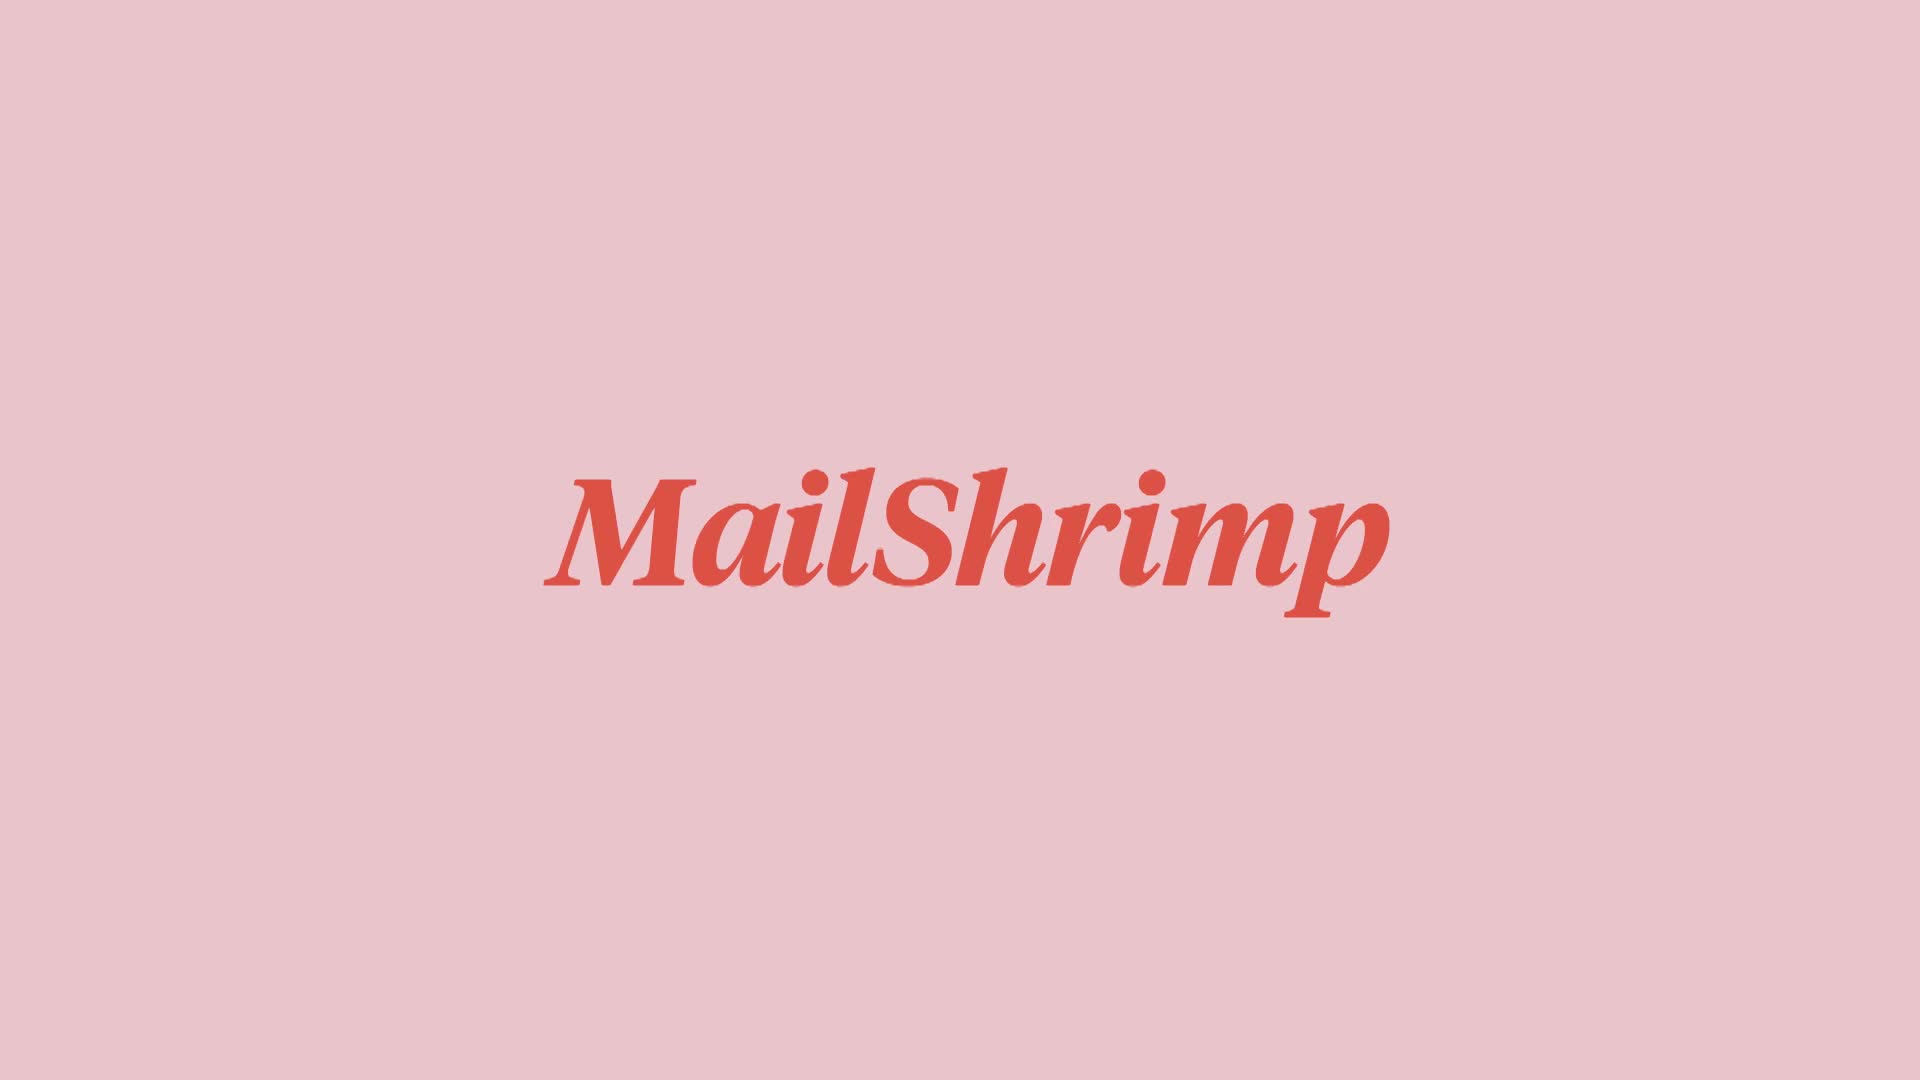 MailChimp: MailShrimp